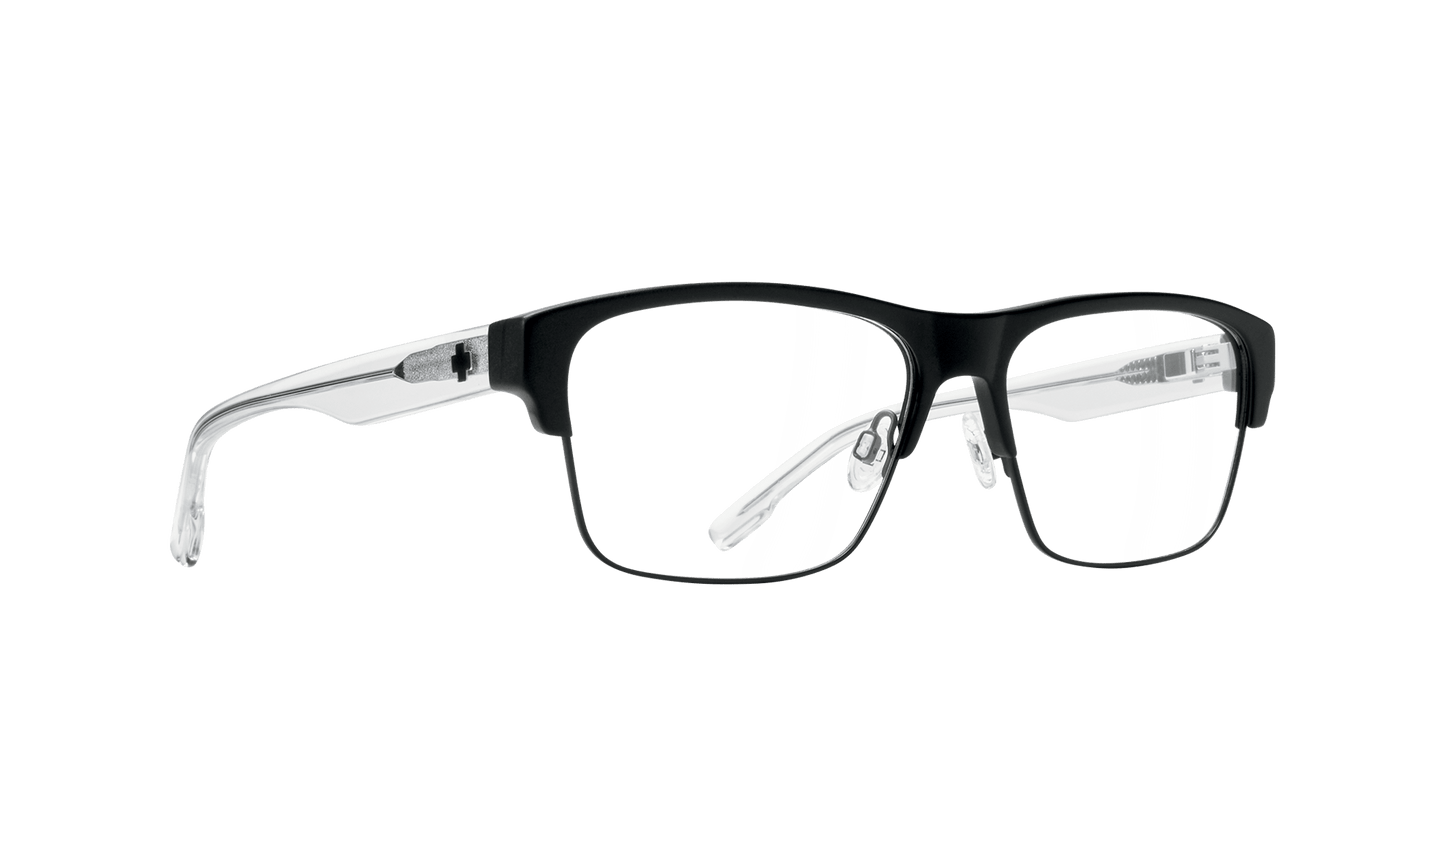 SPY Brody 50/50 57 Eyeglasses   
Style Selection: Brody 5050 57 - Matte Black Gloss Crystal
 One Size